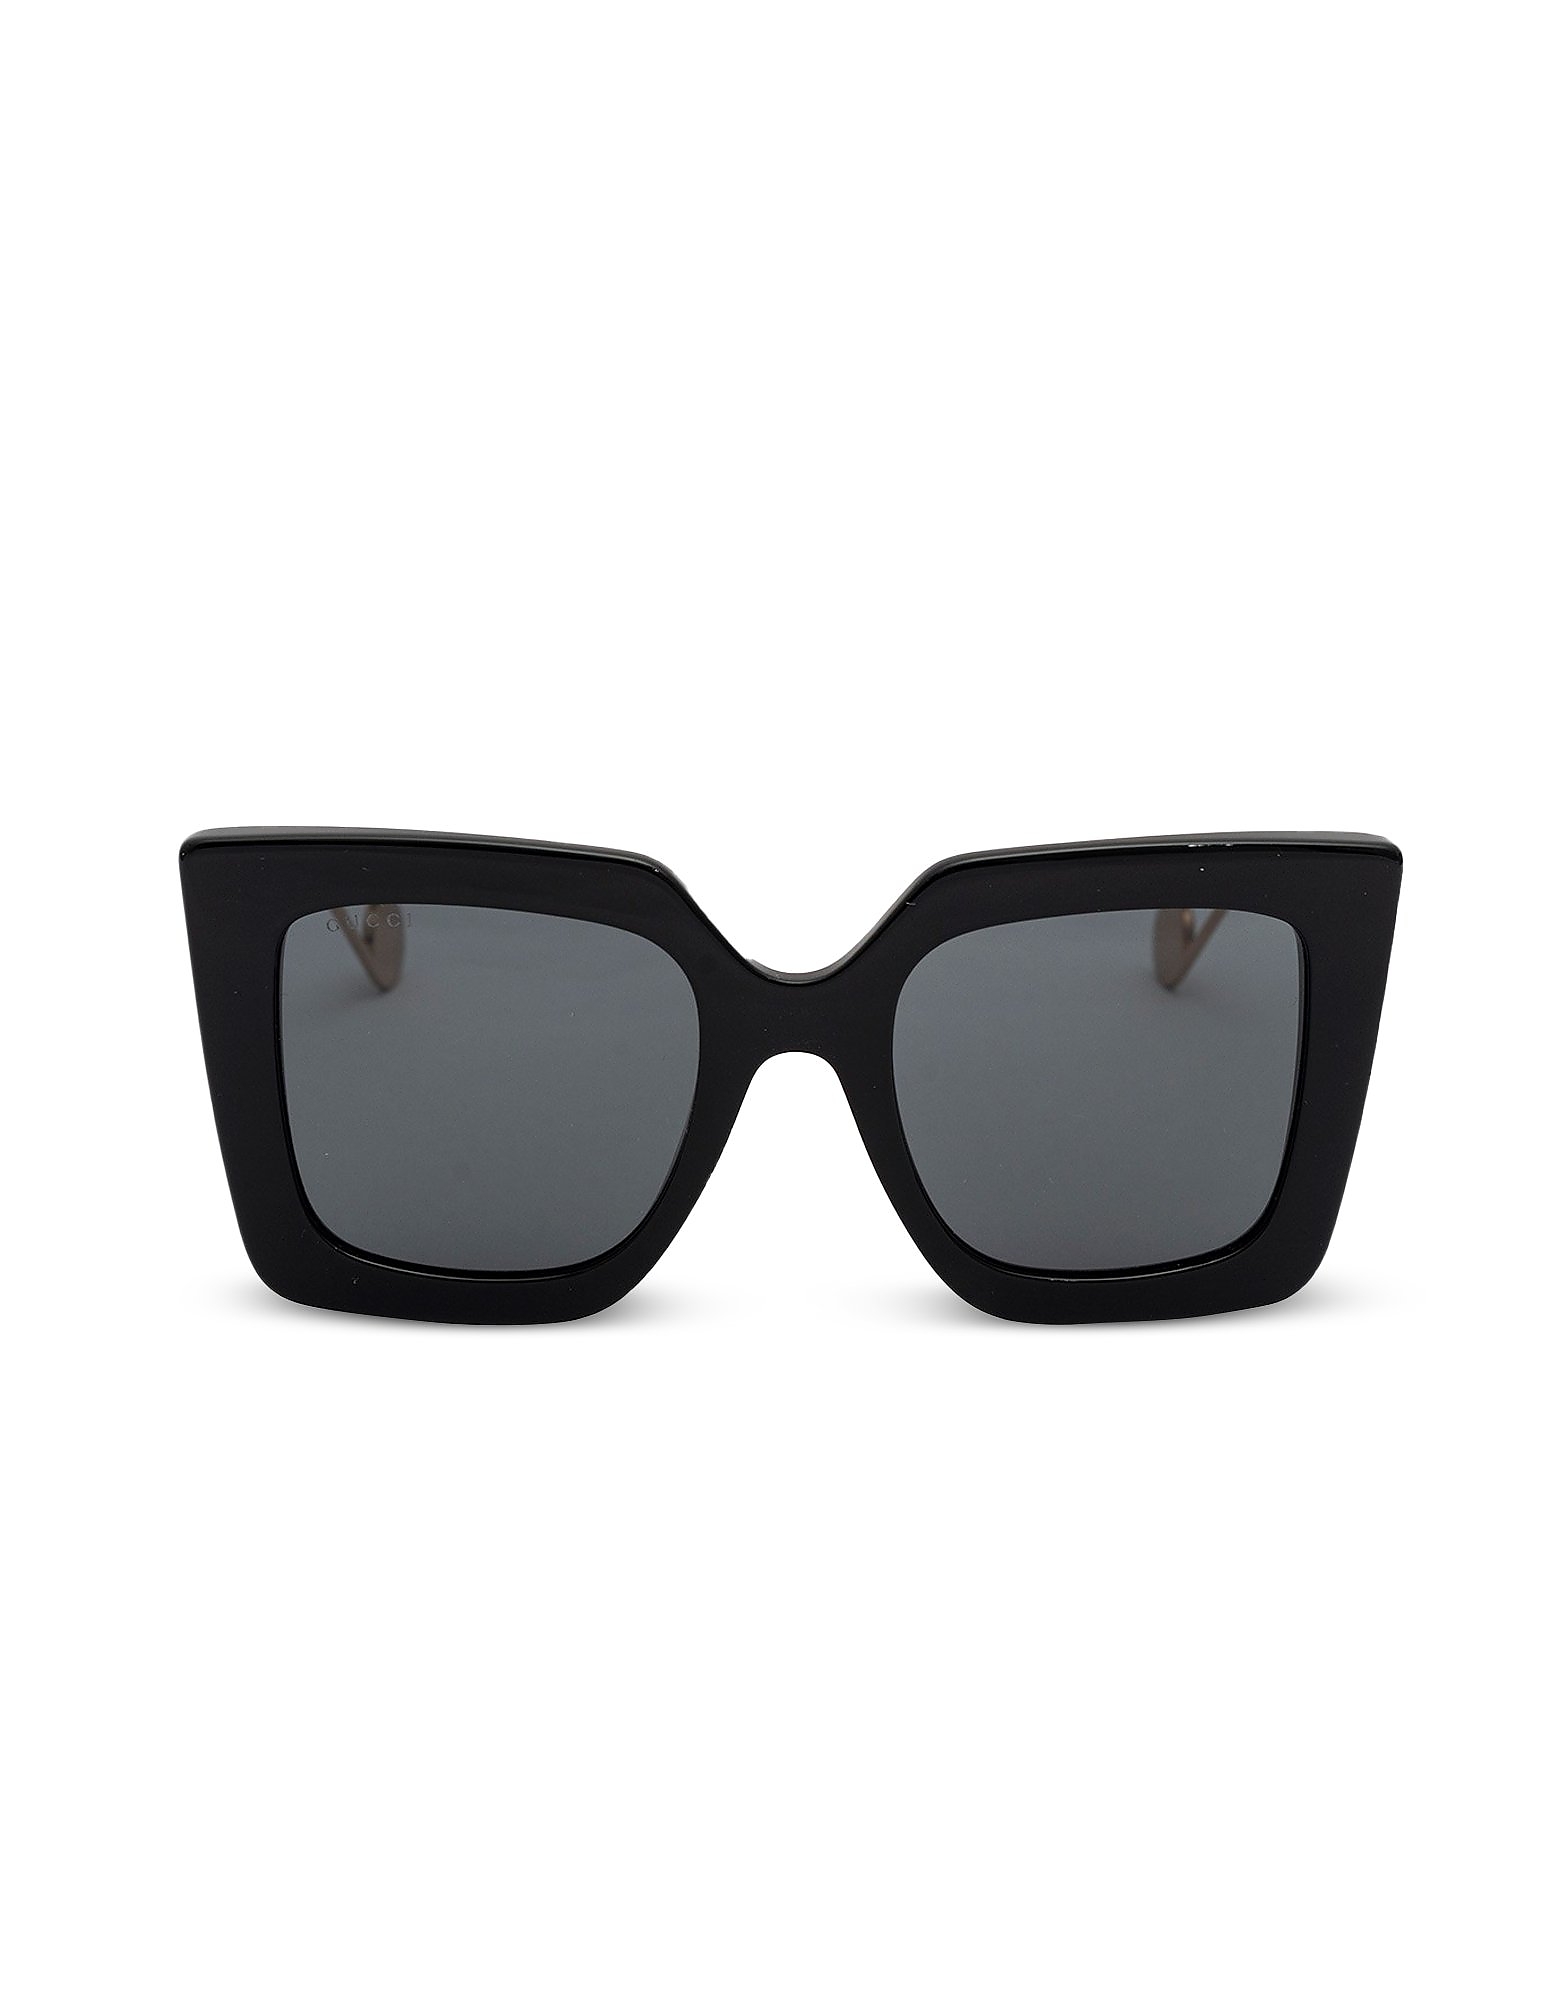 Gucci Sunglasses Black Acetate Women's Oversized Sunglasses